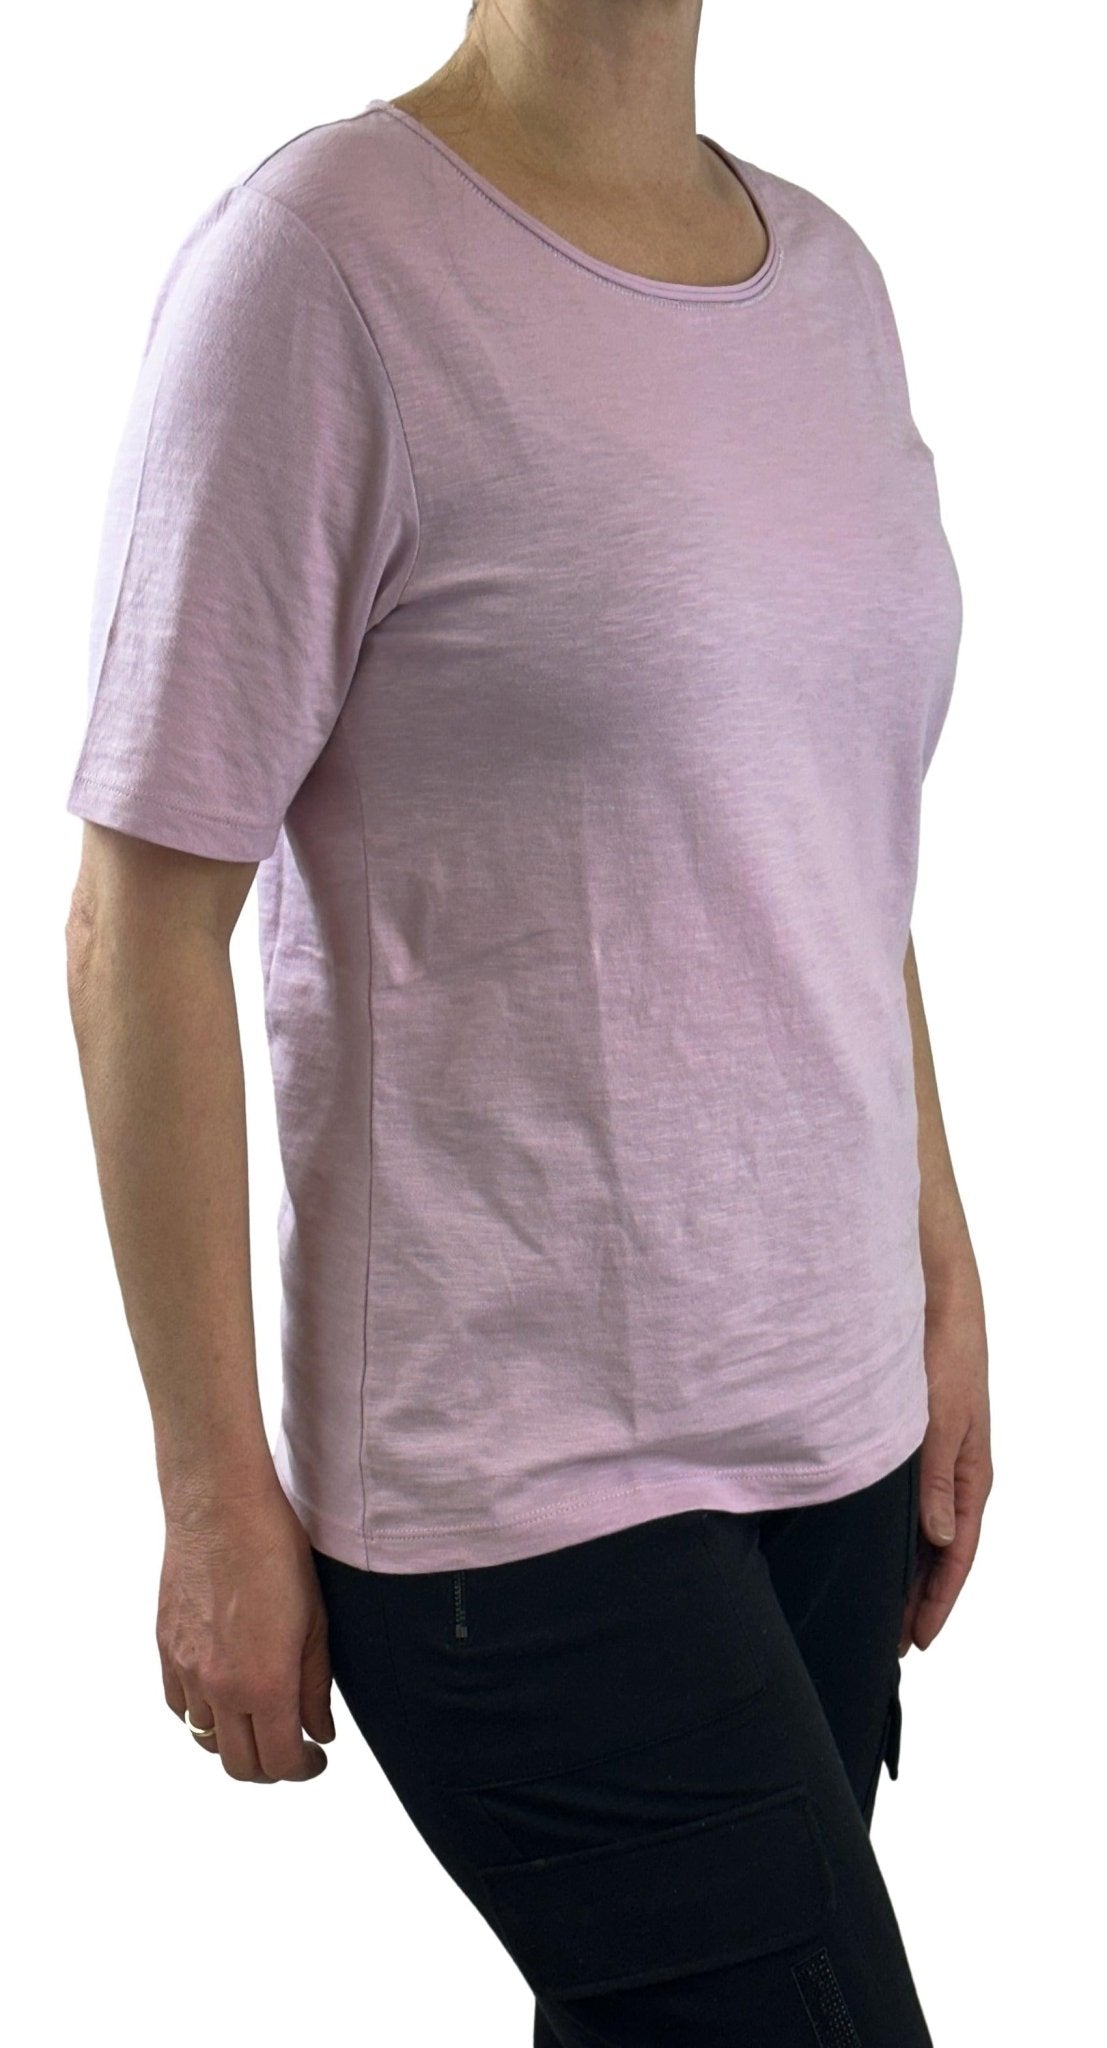 Monari Shirt 408527. Mode von Monari